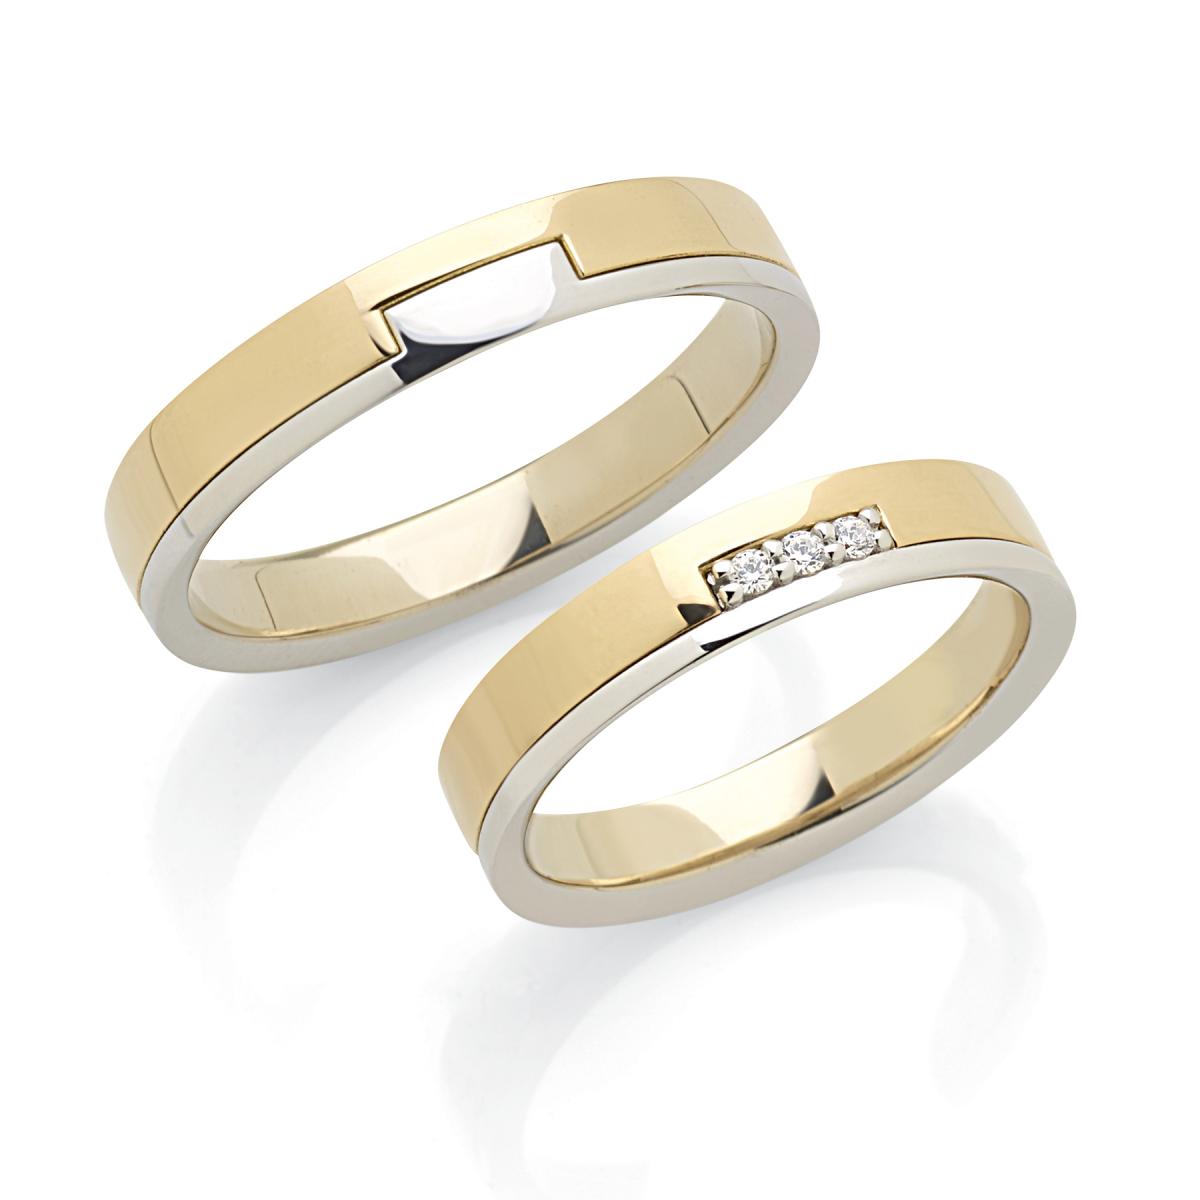 4 mm wide 18kt gold wedding ring - 564